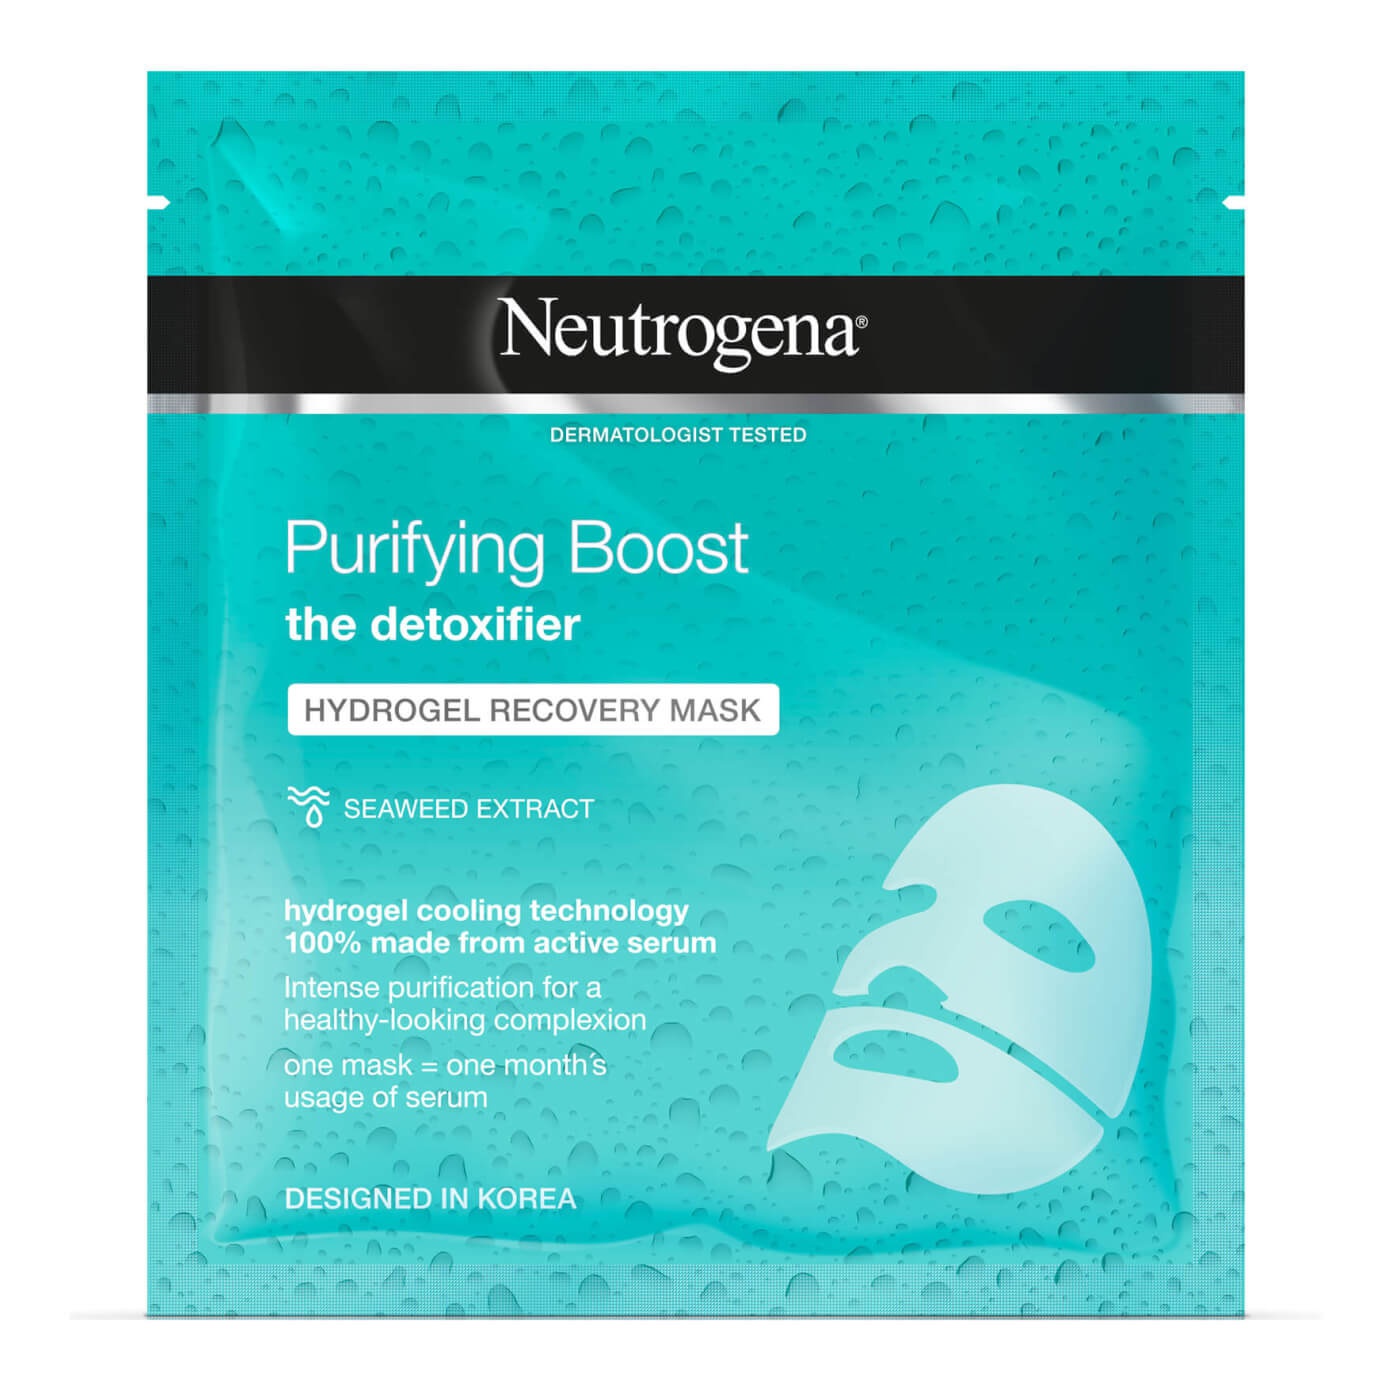 Neutrogena Purifying Boost Hydrogel Recovery Mask